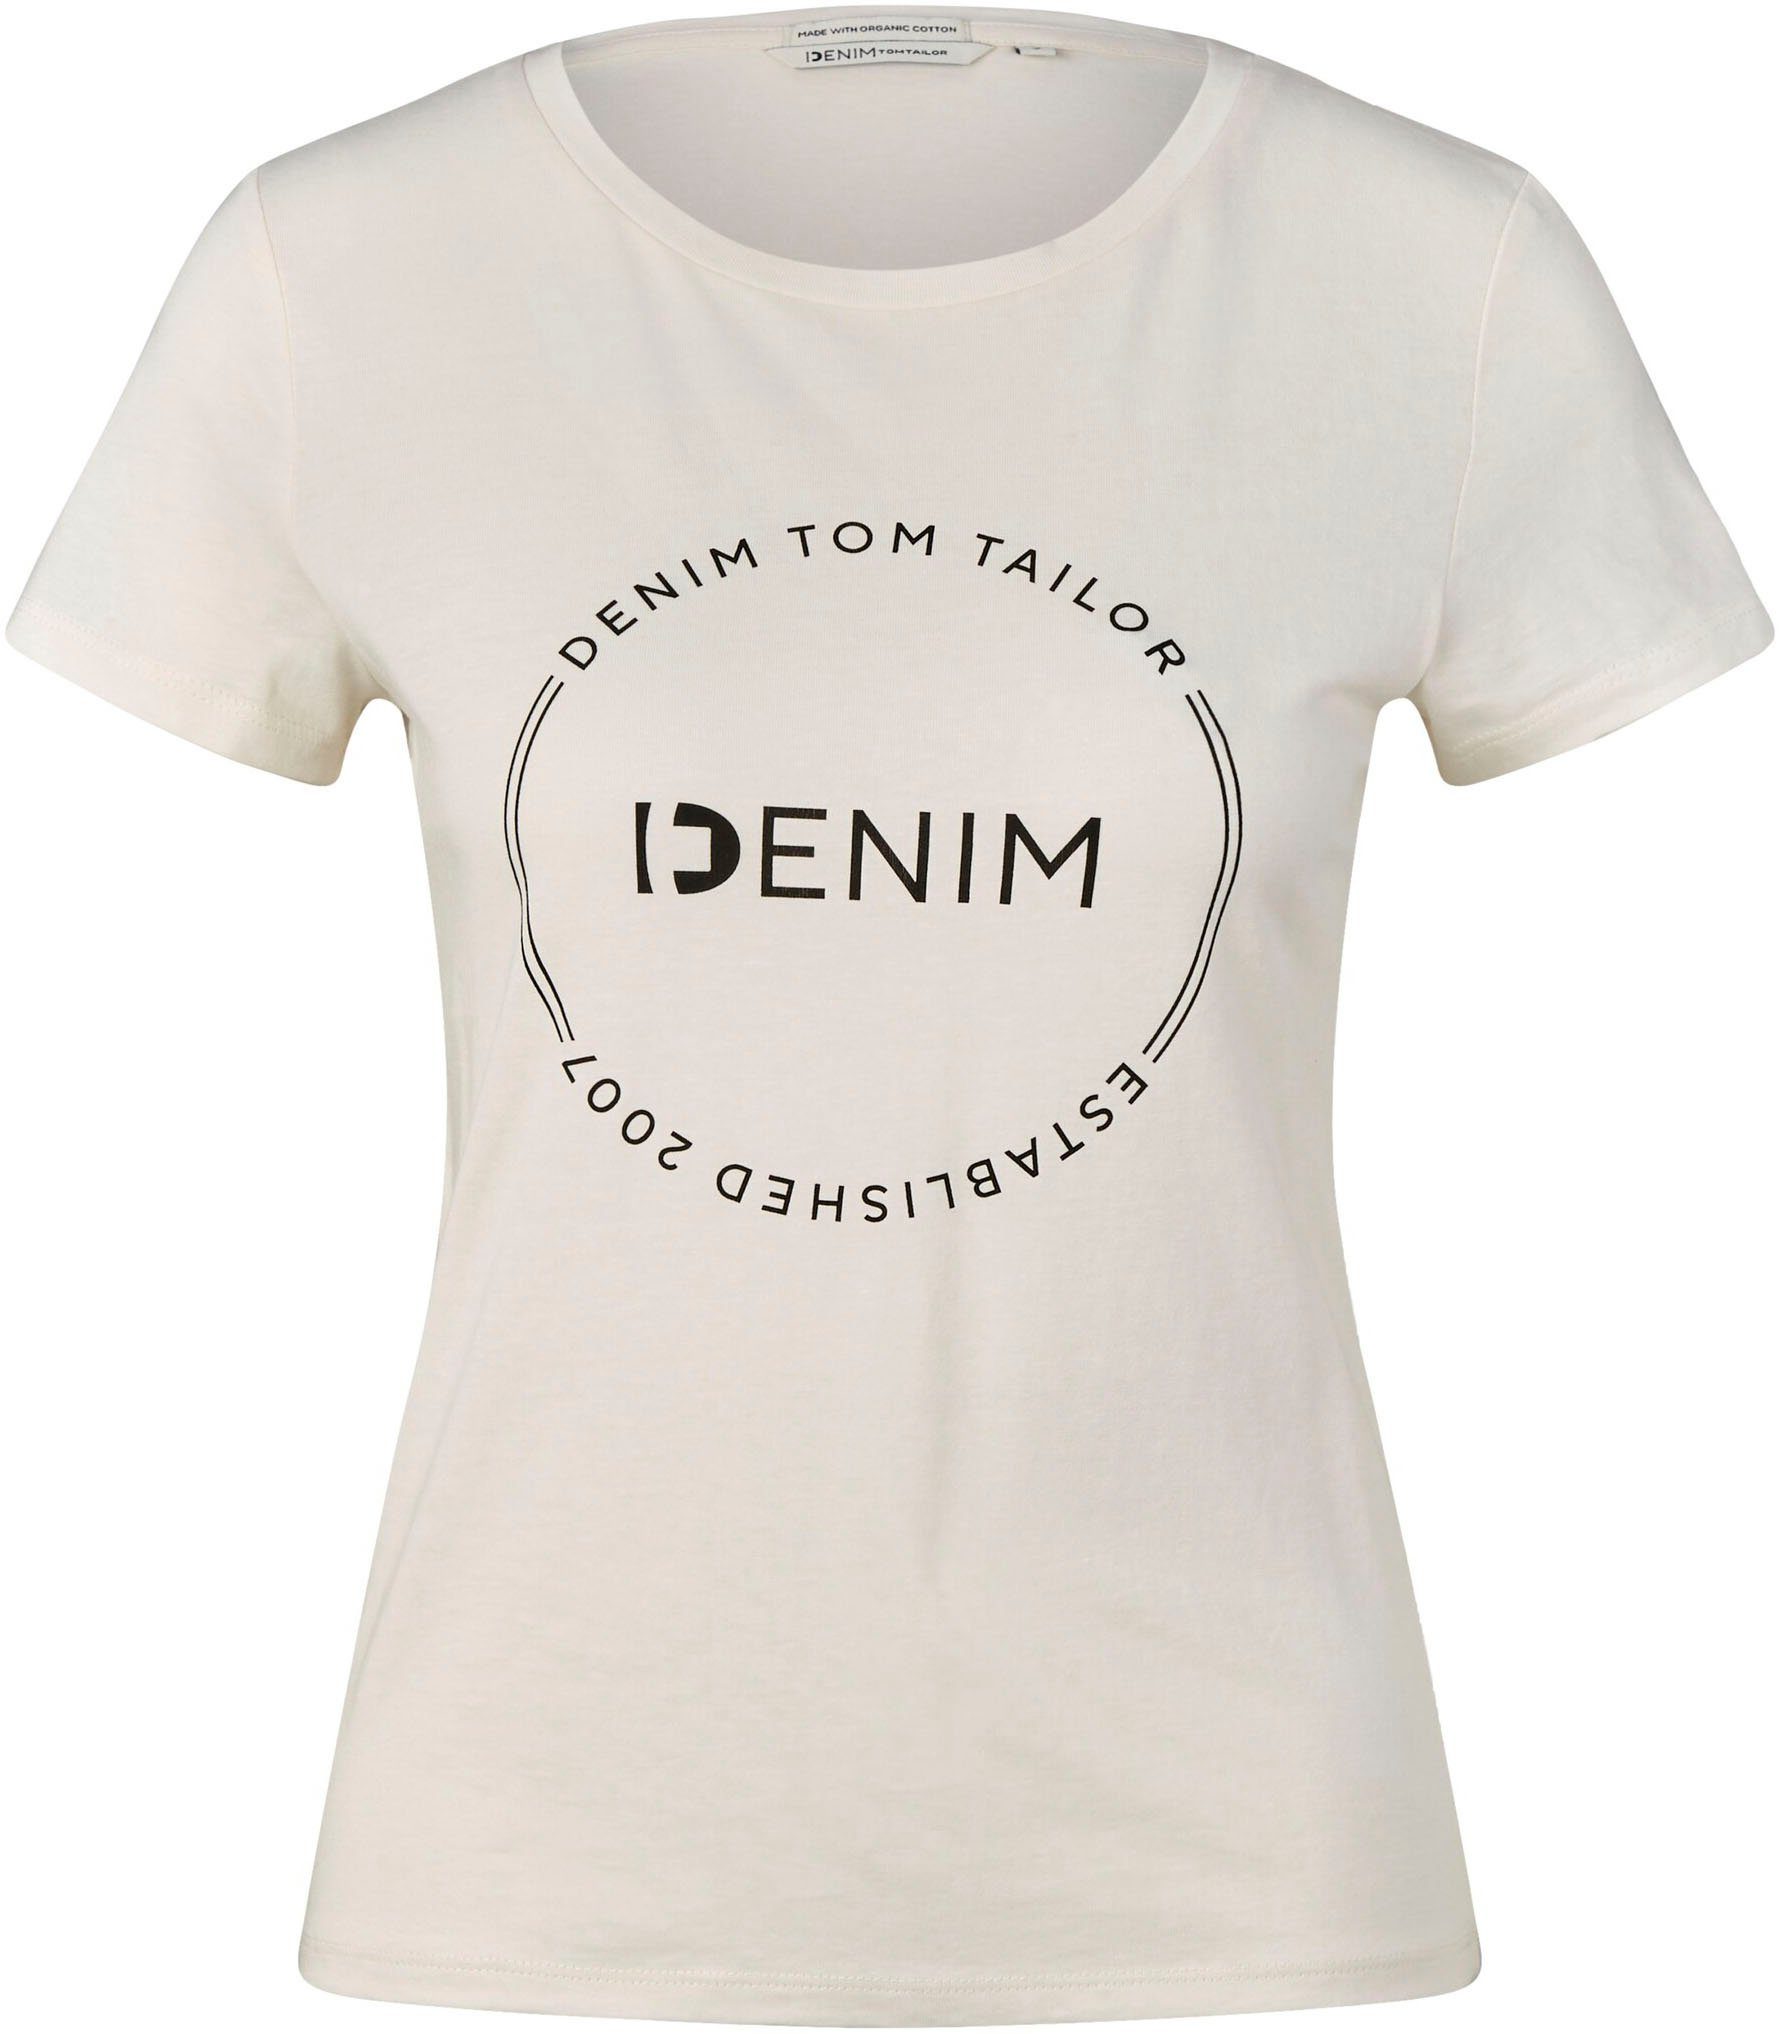 TOM TAILOR weiß Denim T-Shirt